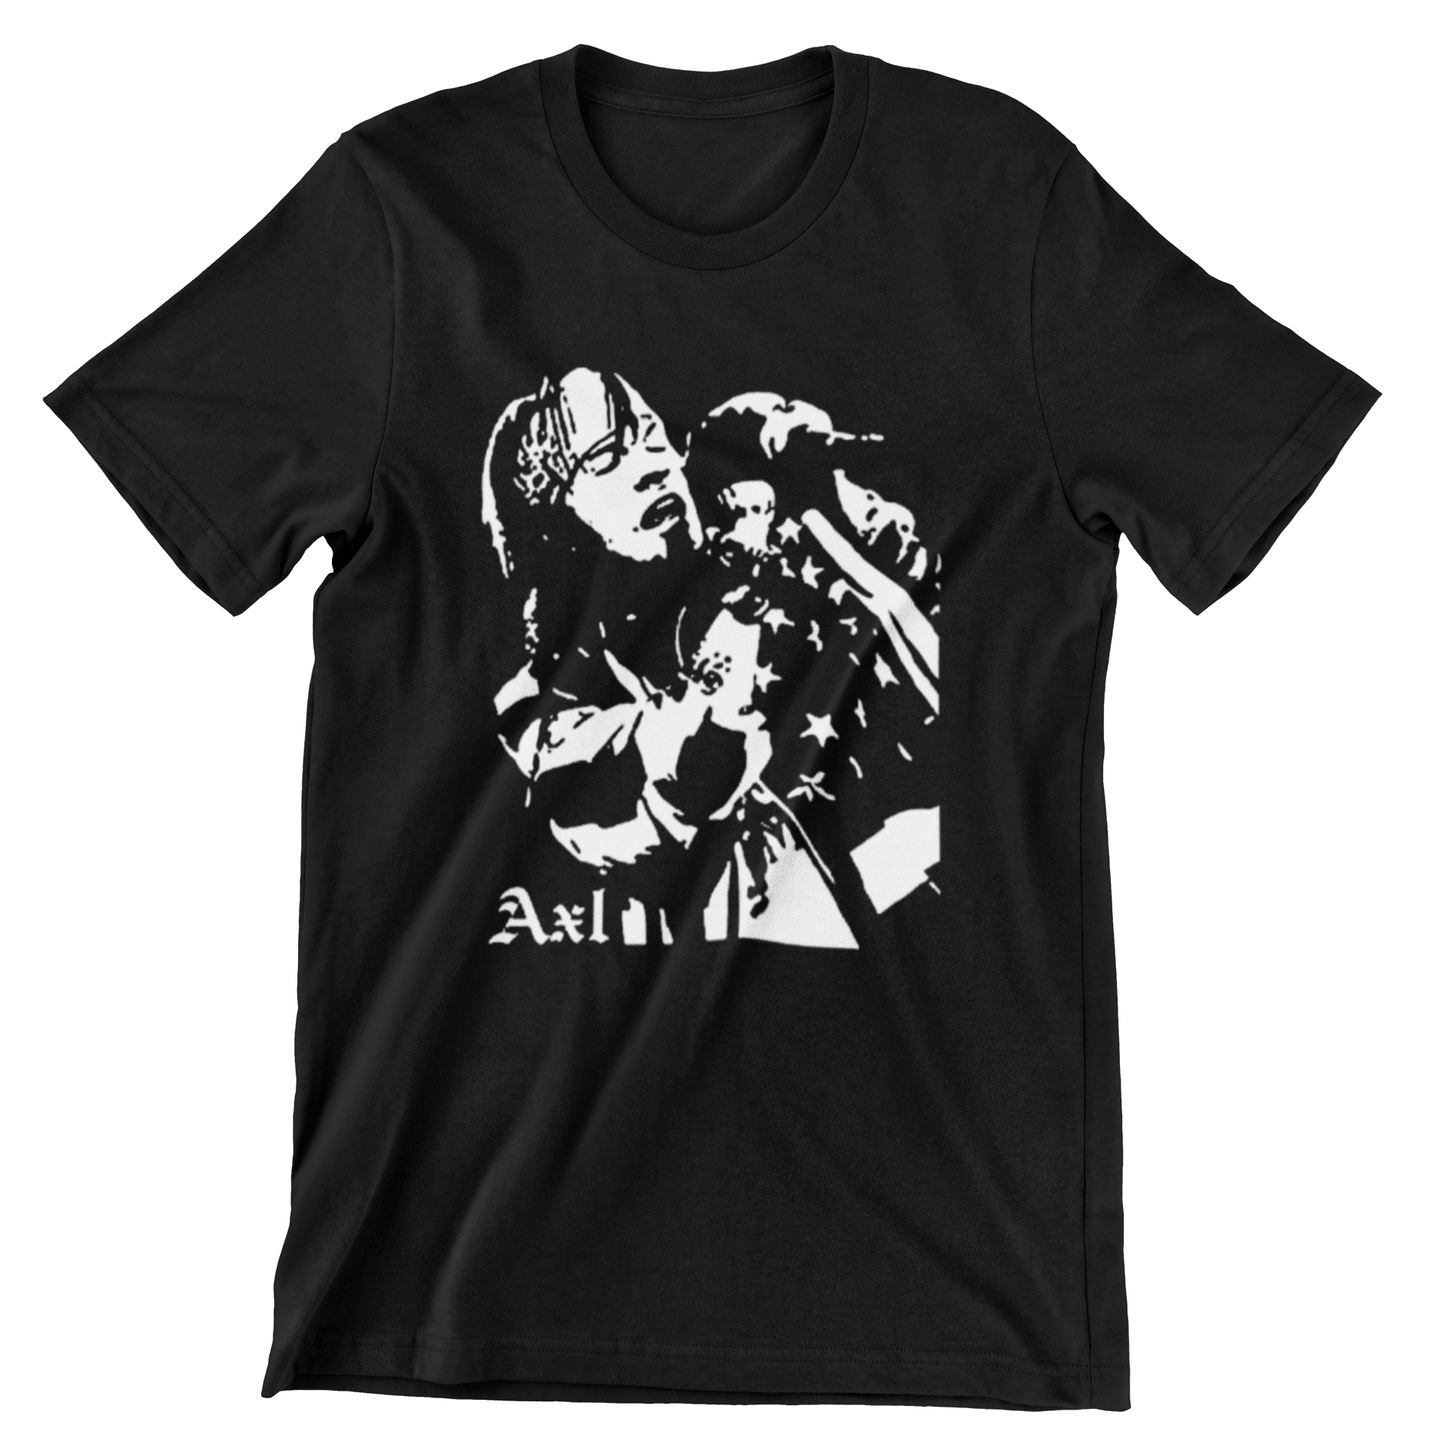 Axl Rose Guns N' Roses t shirts rockviewtees.com